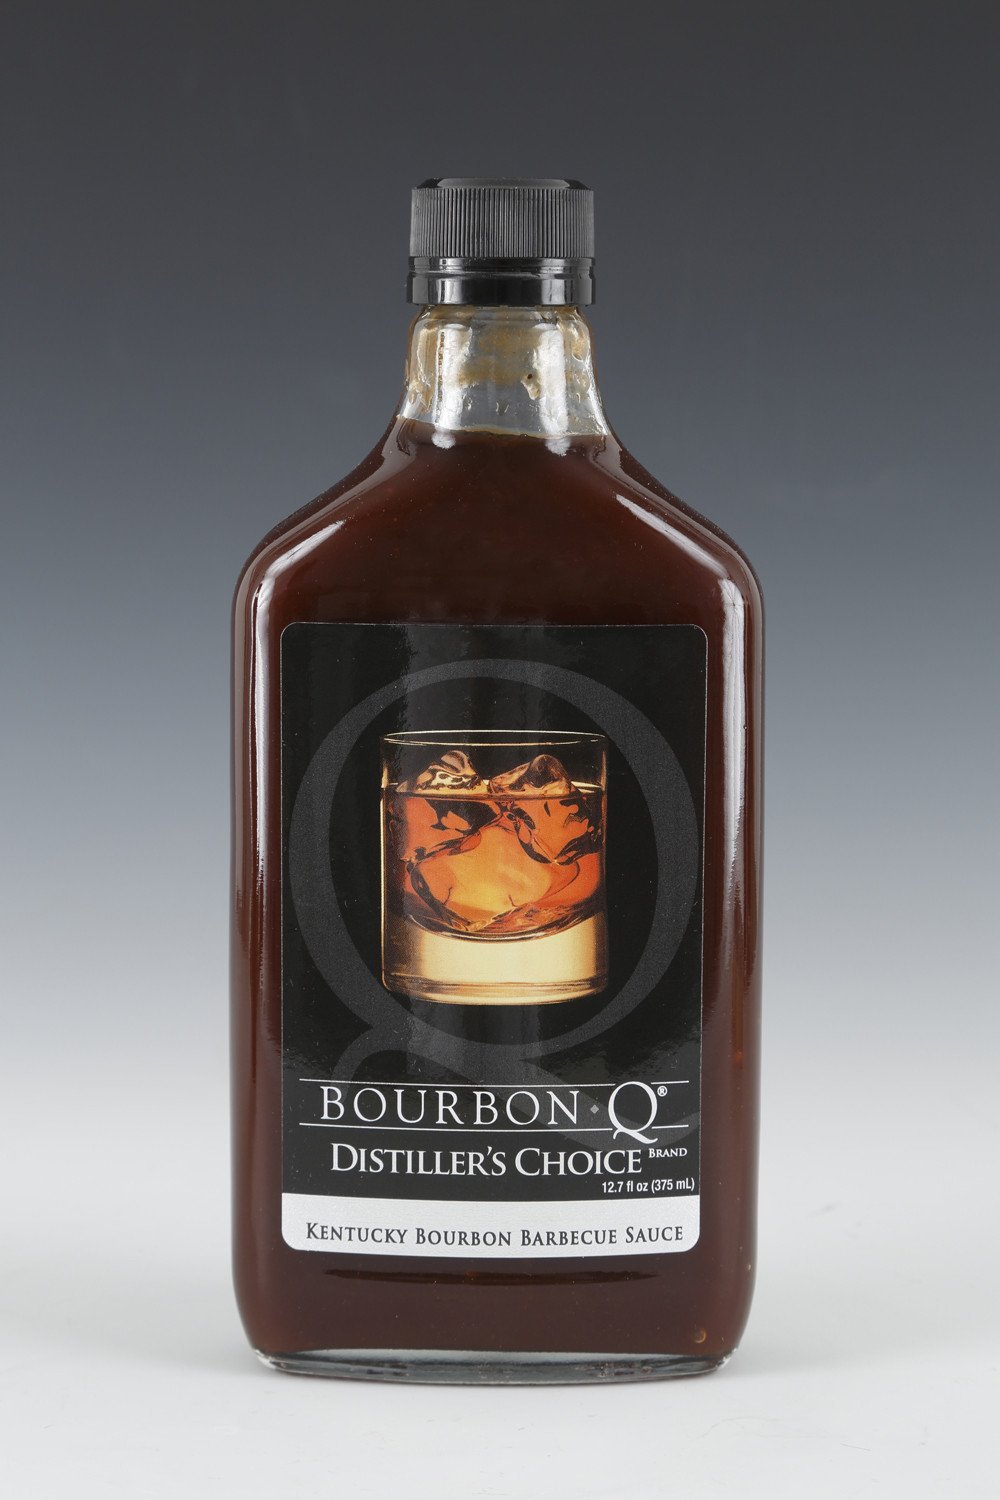 BourbonQ Distiller's Choice Barbecue Sauce